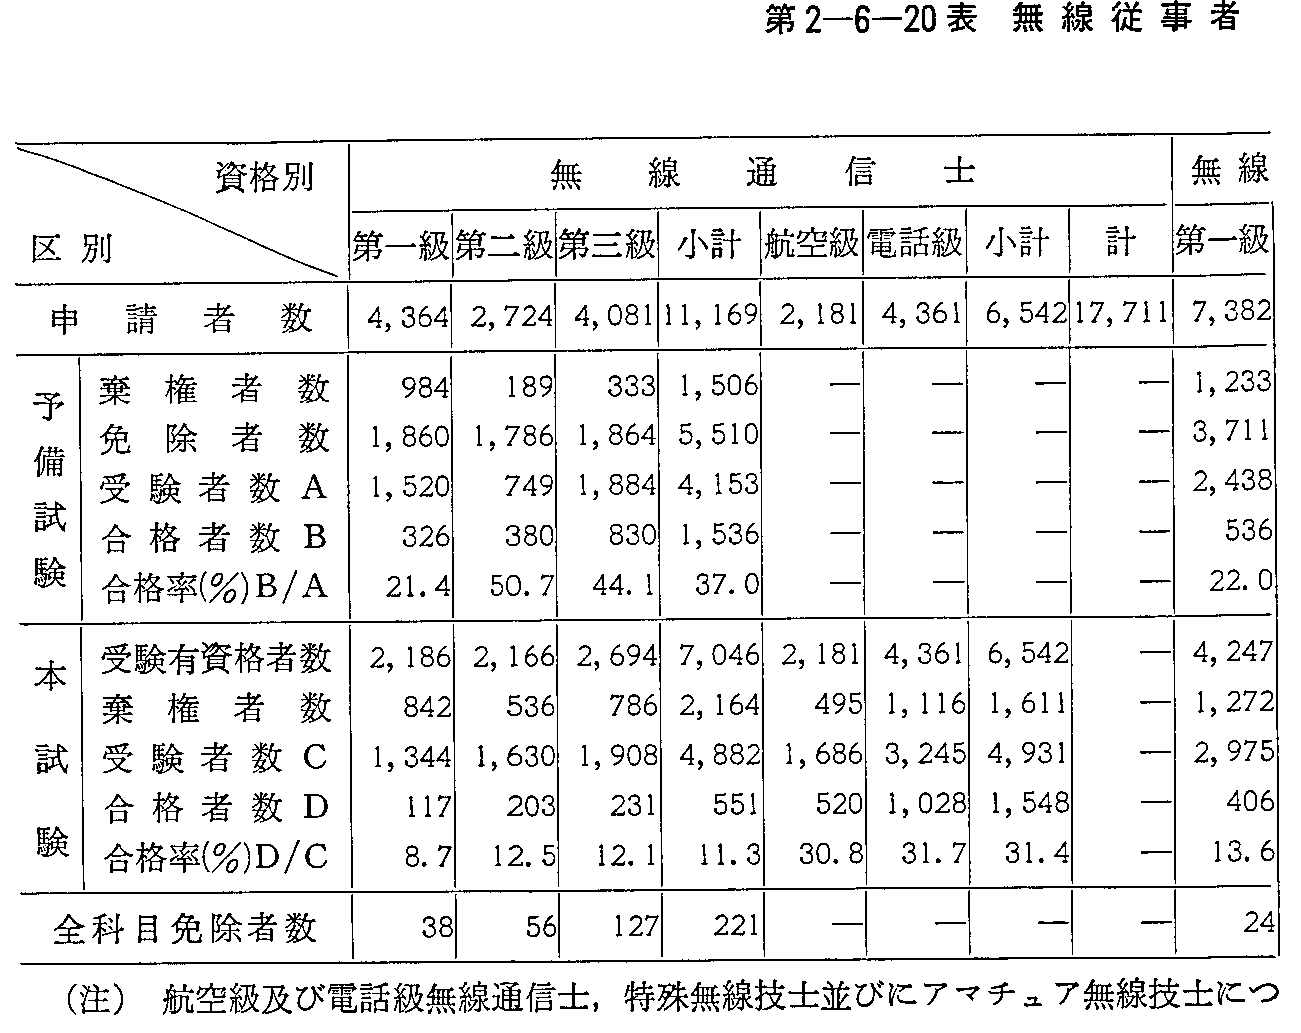 2-6-20\ ]ҍƎ{s(53Nx) (1)